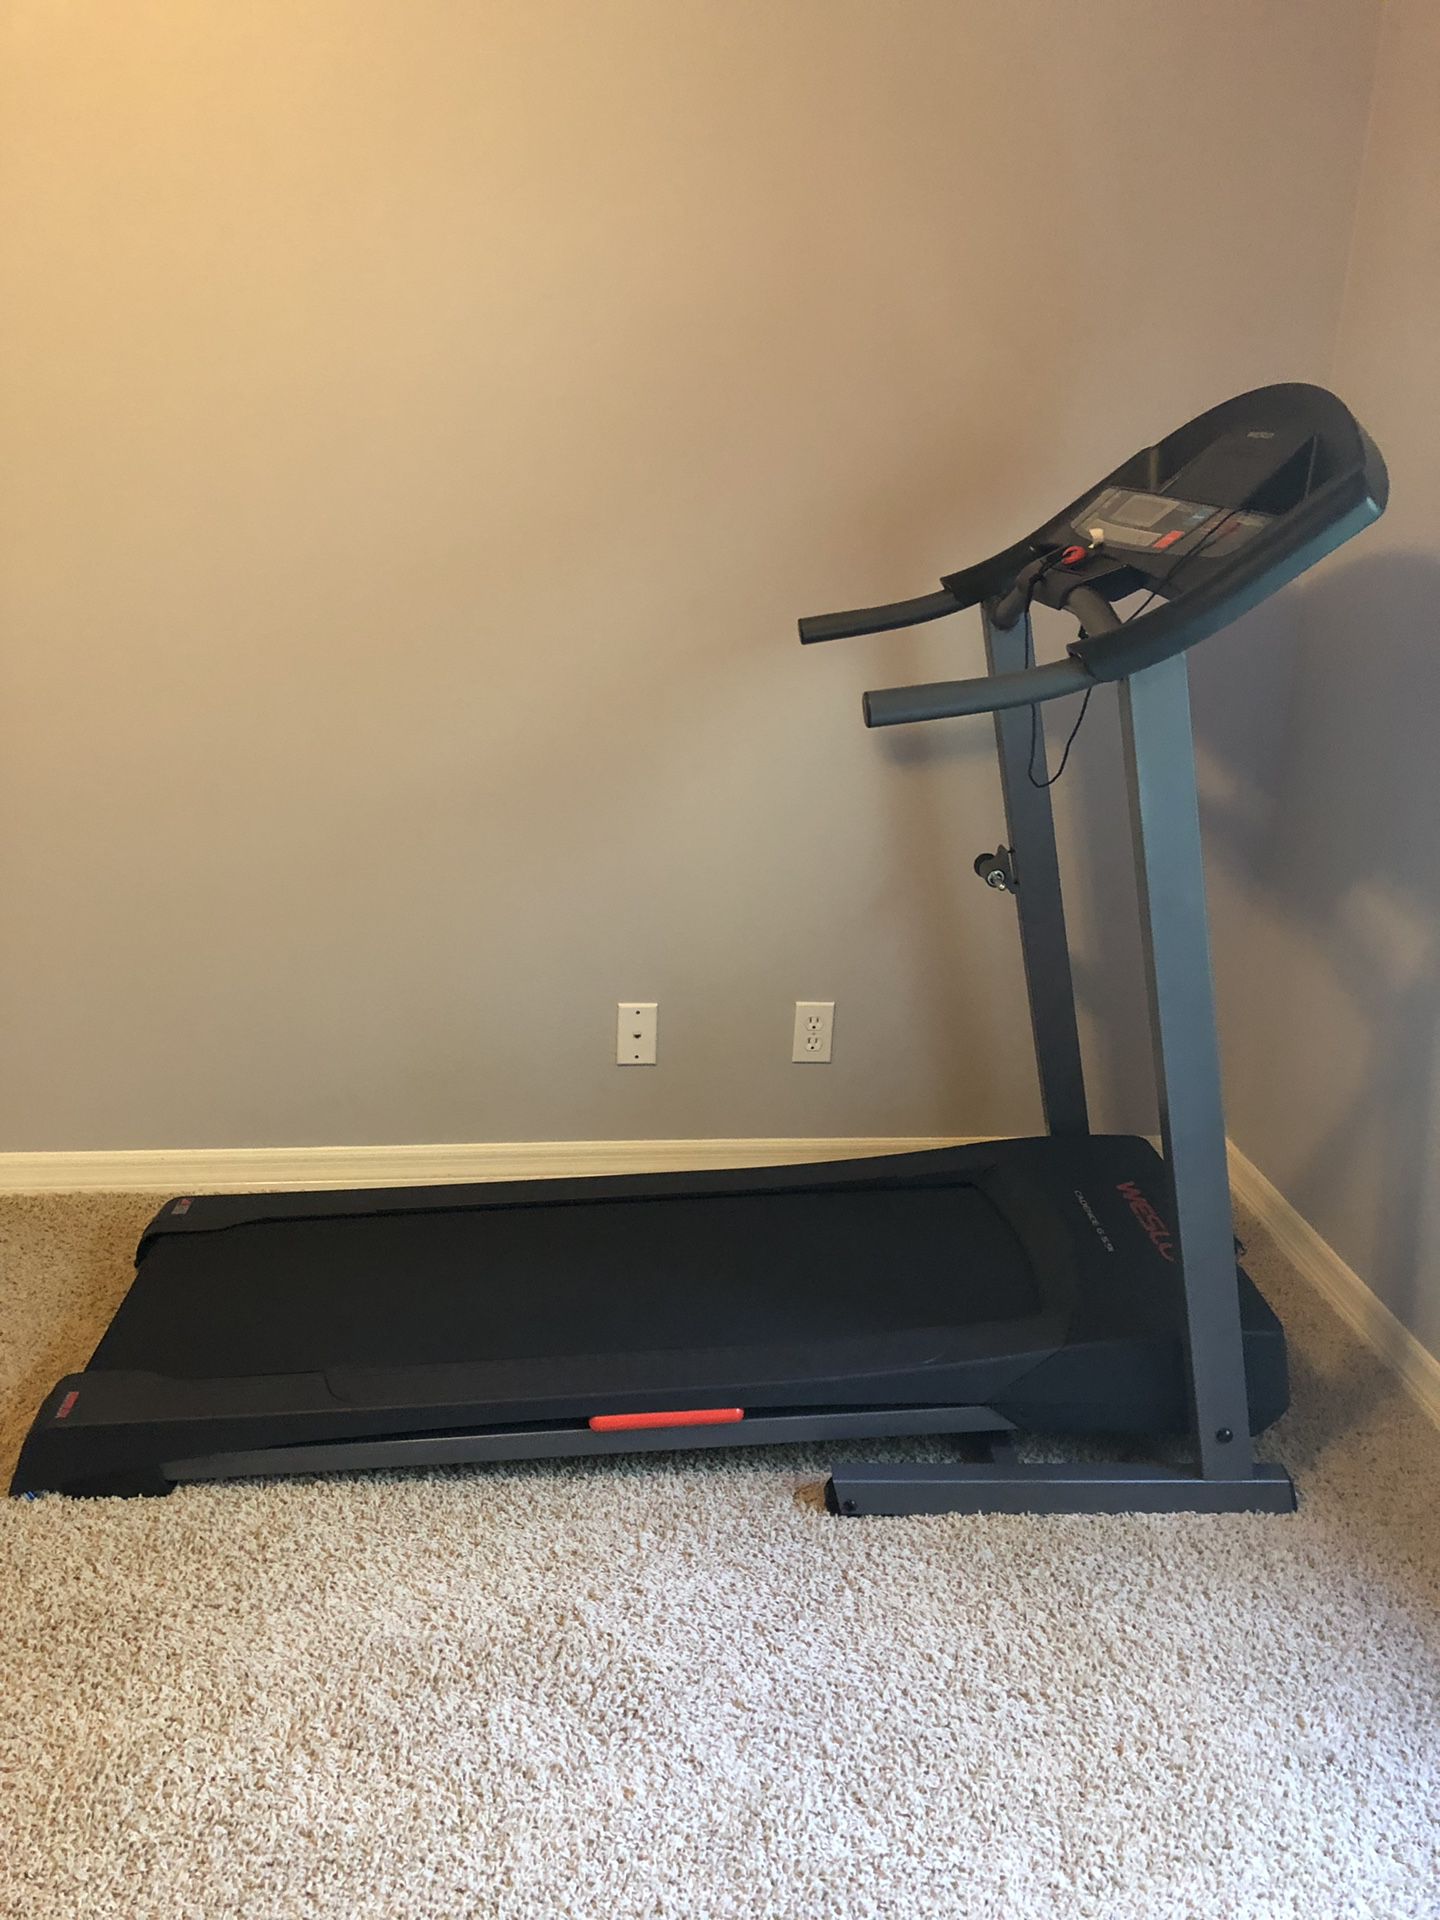 Treadmill-like new